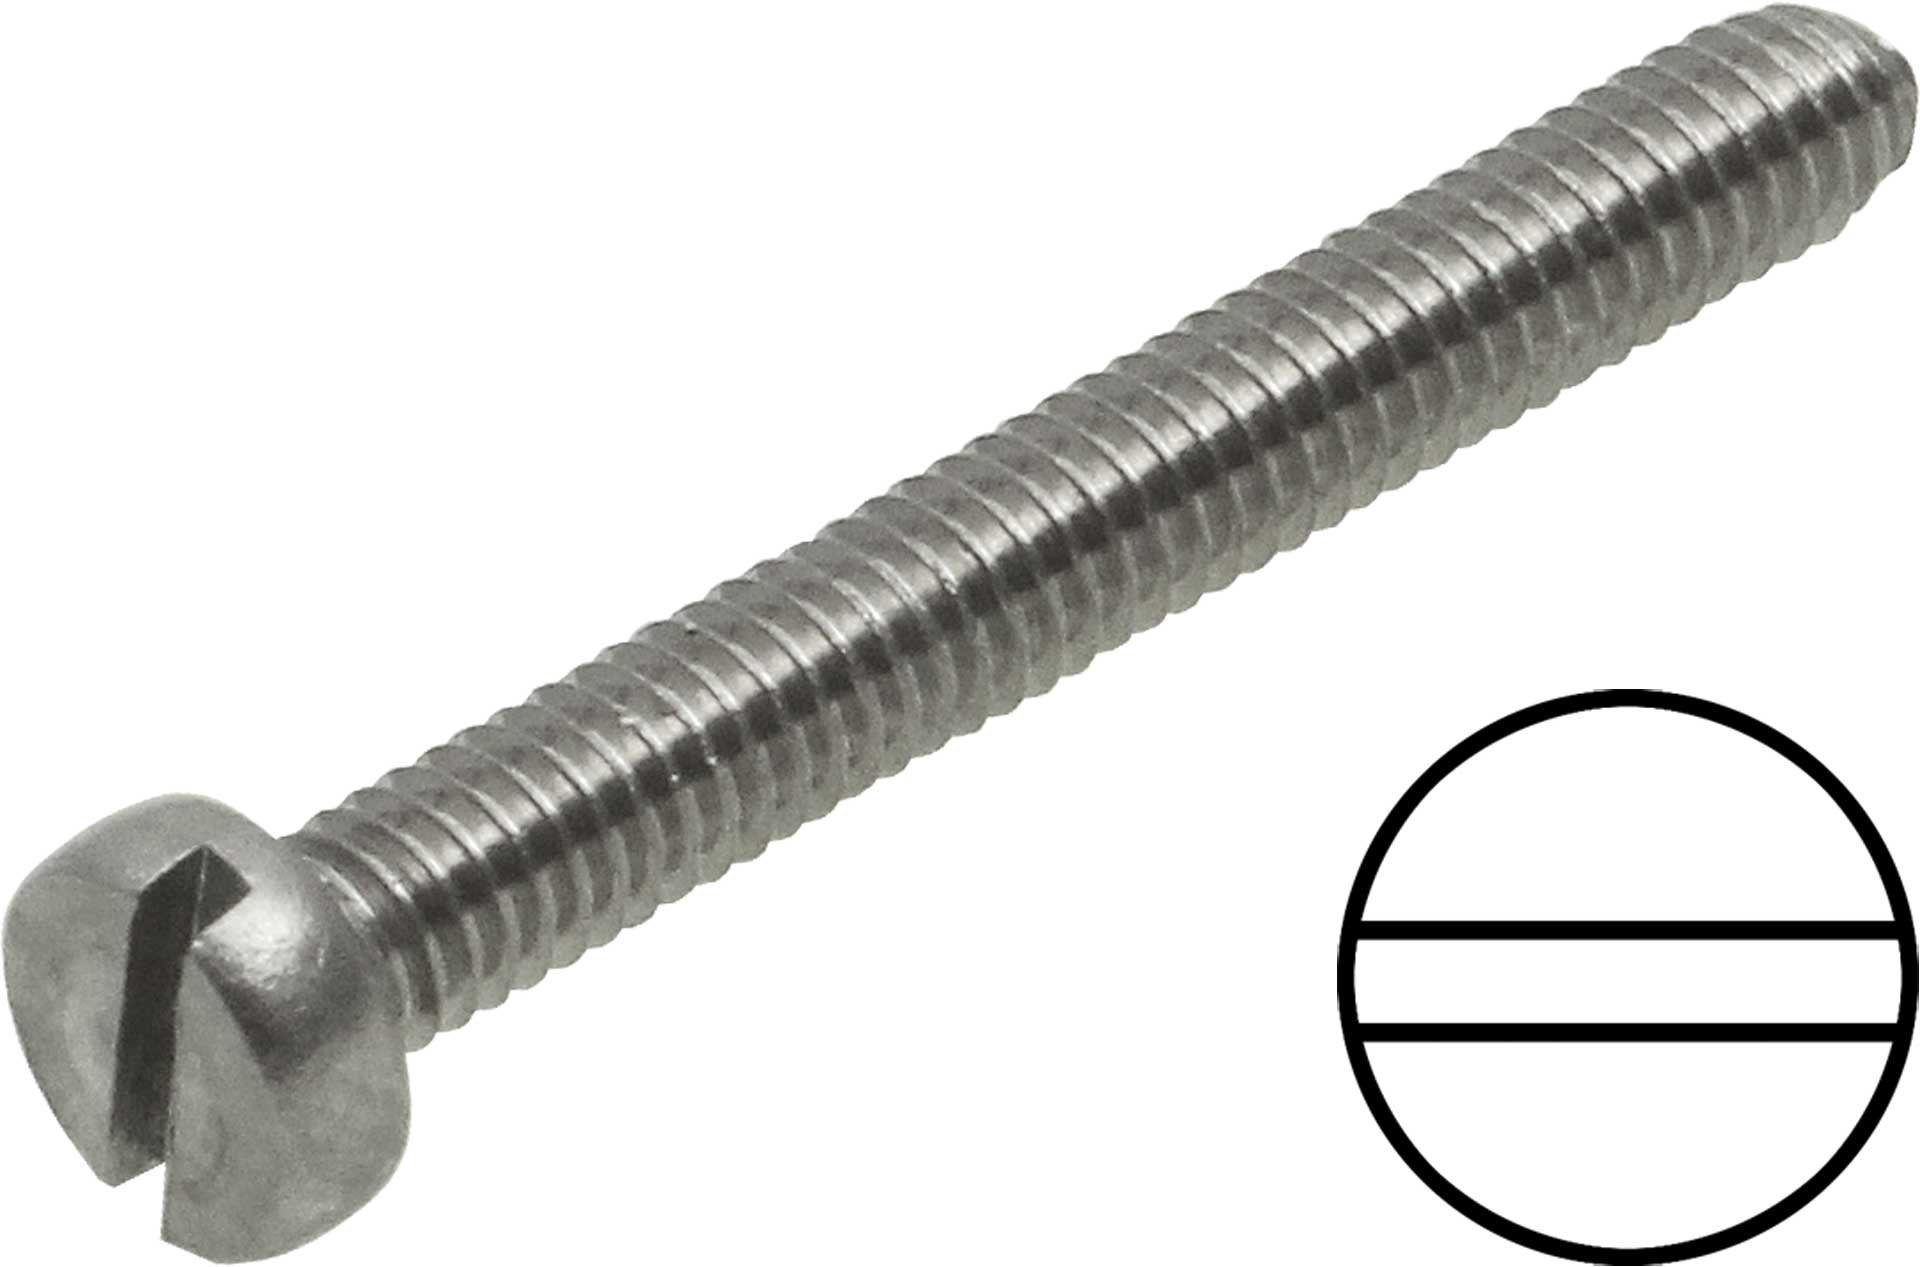 Modellbau Lindinger Cylinder head screws M3/6mm slotted Stainless steel, rustproof 25pcs.